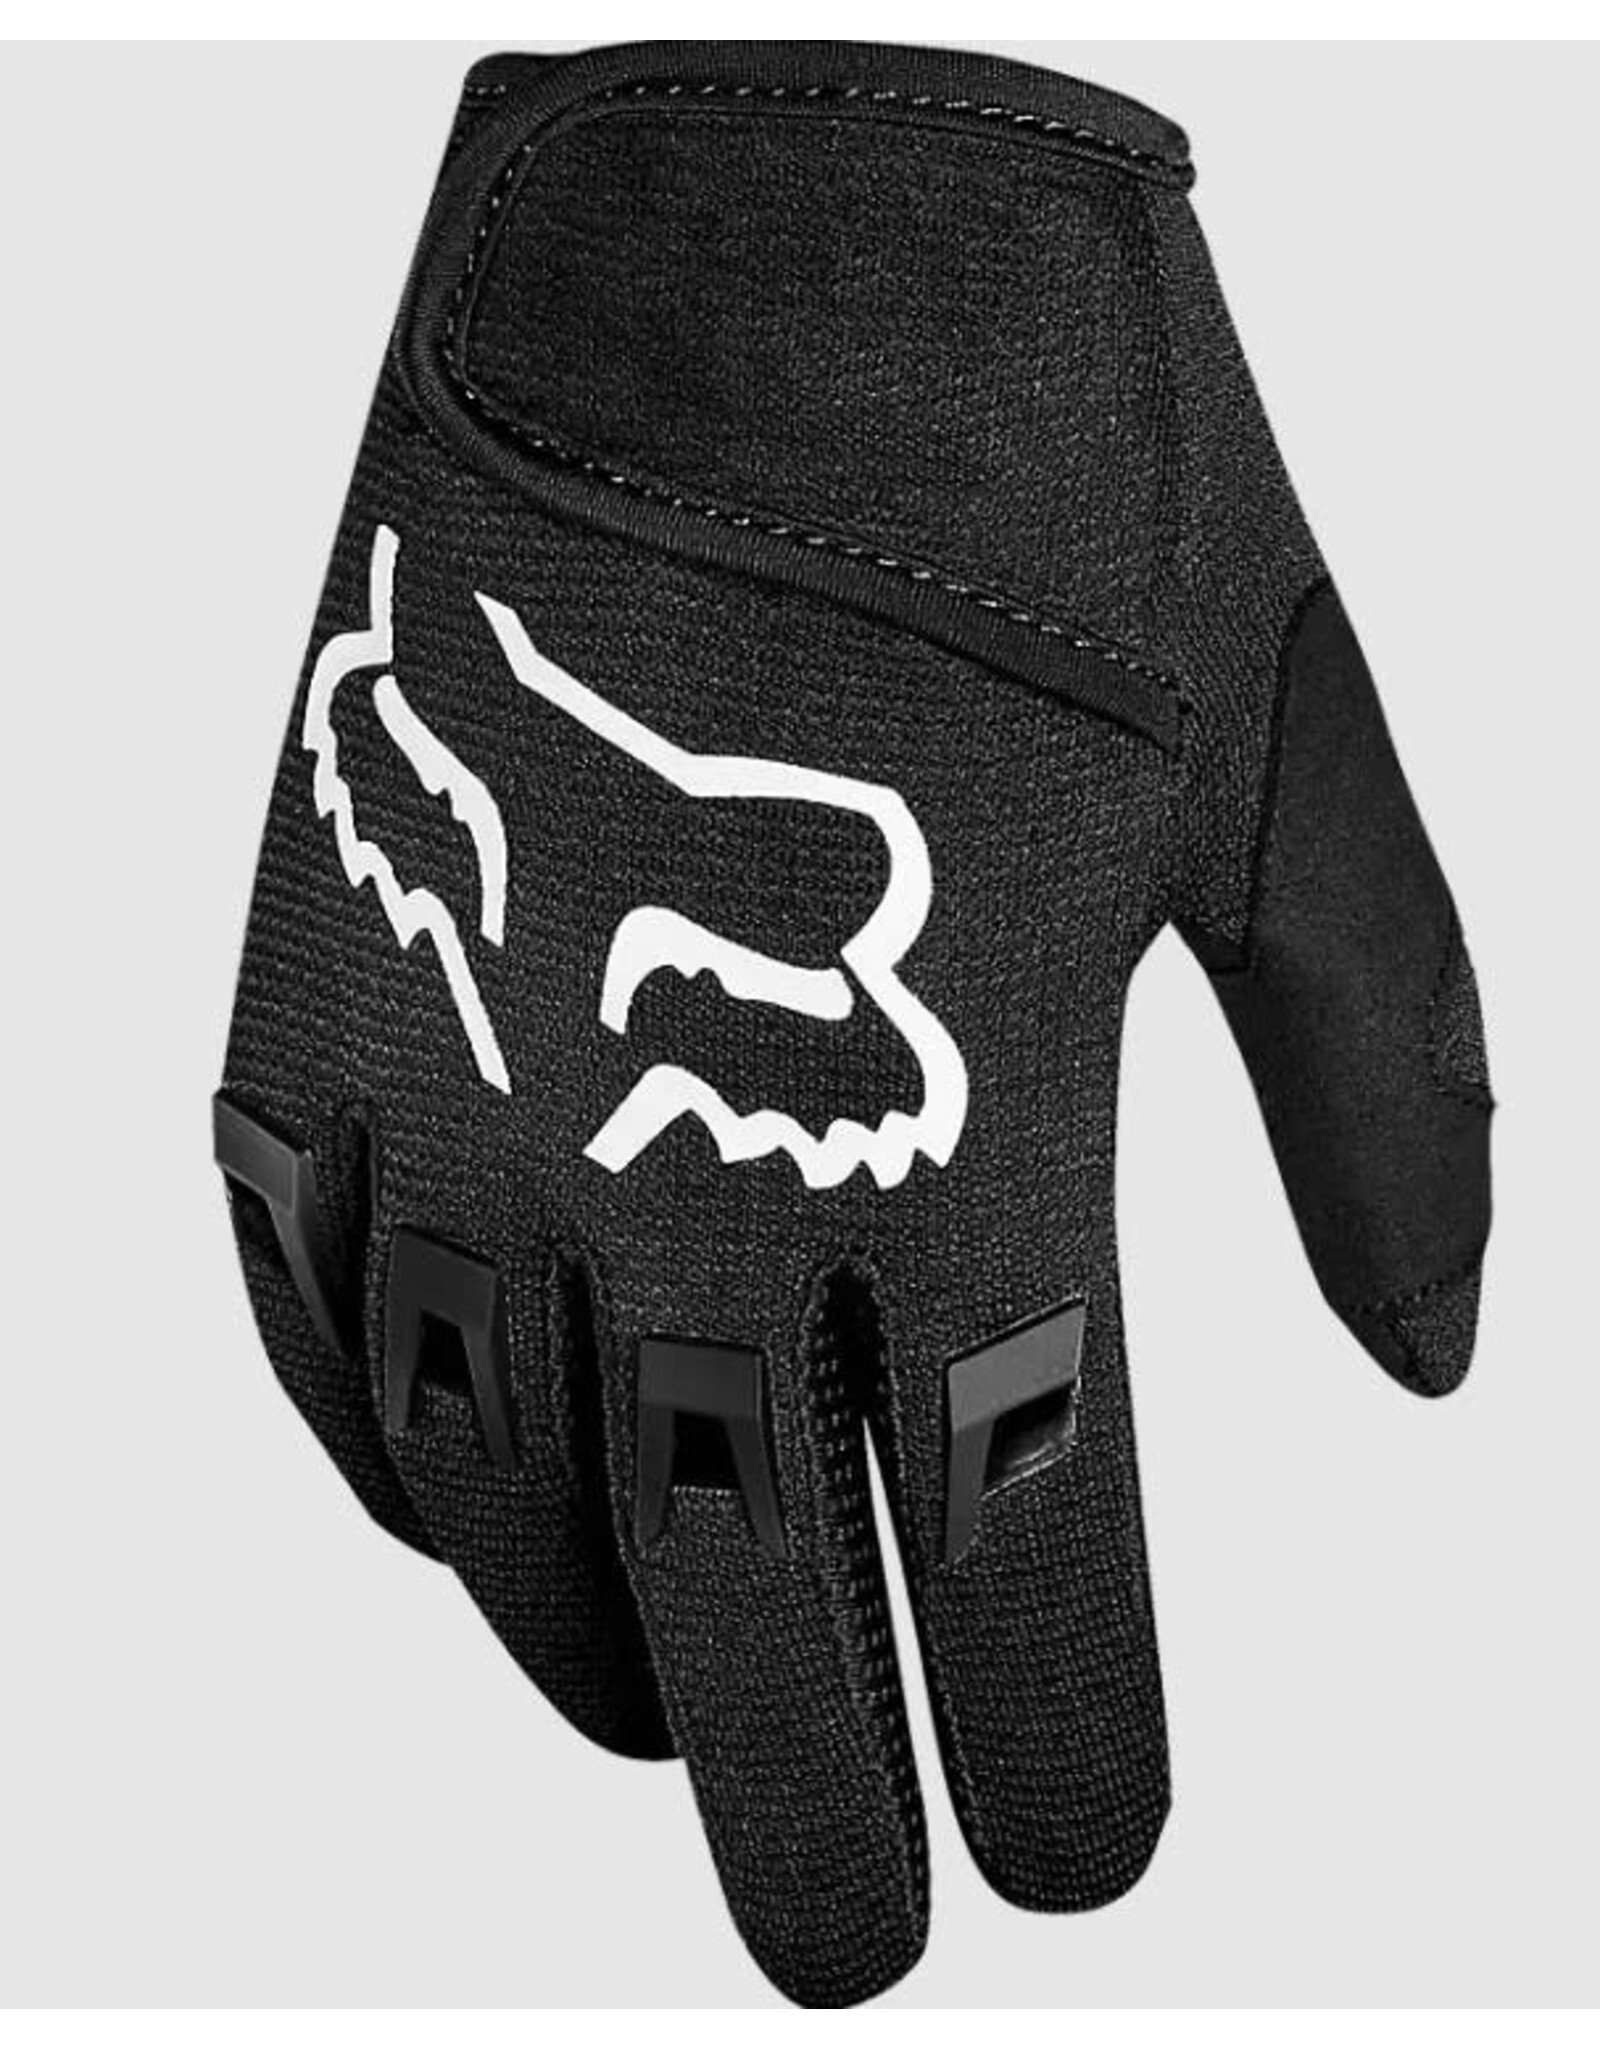 Fox Racing Gloves Fox Dirtpaw Kid's